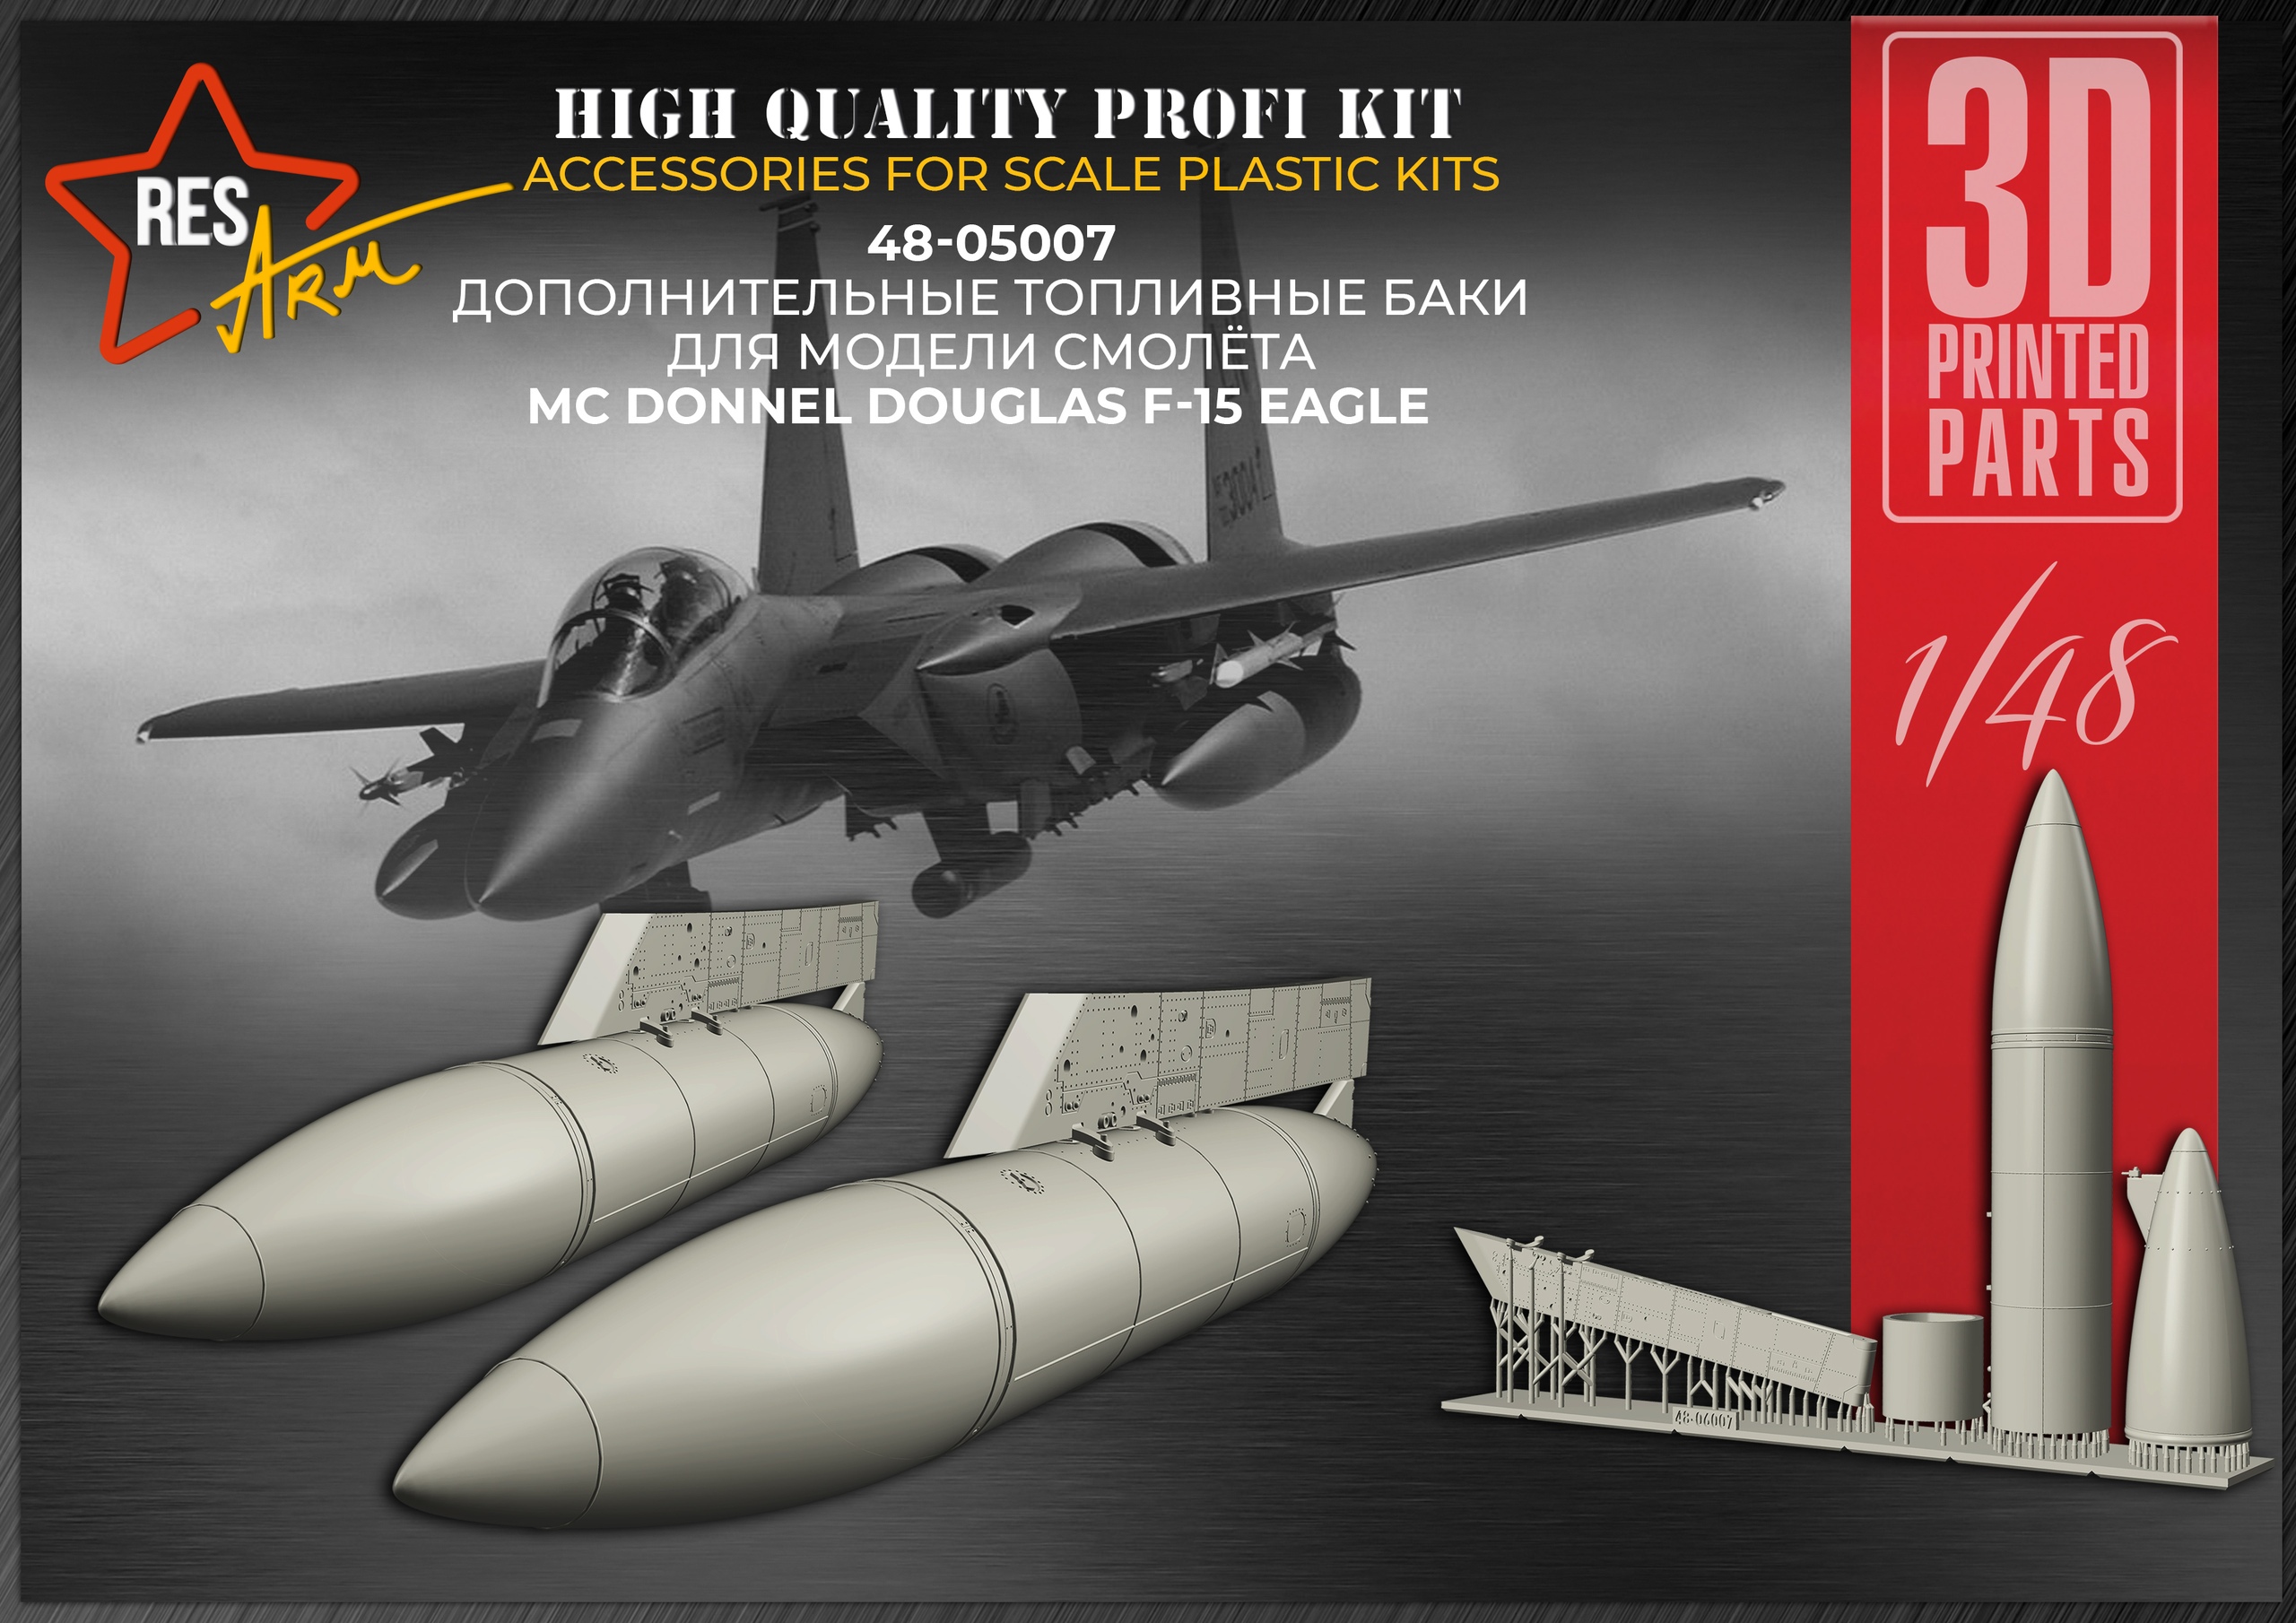 Additions (3D resin printing) 1/48 Additional MC Donnel Douglas F-15 Eagle fuel tanks (RESArm)